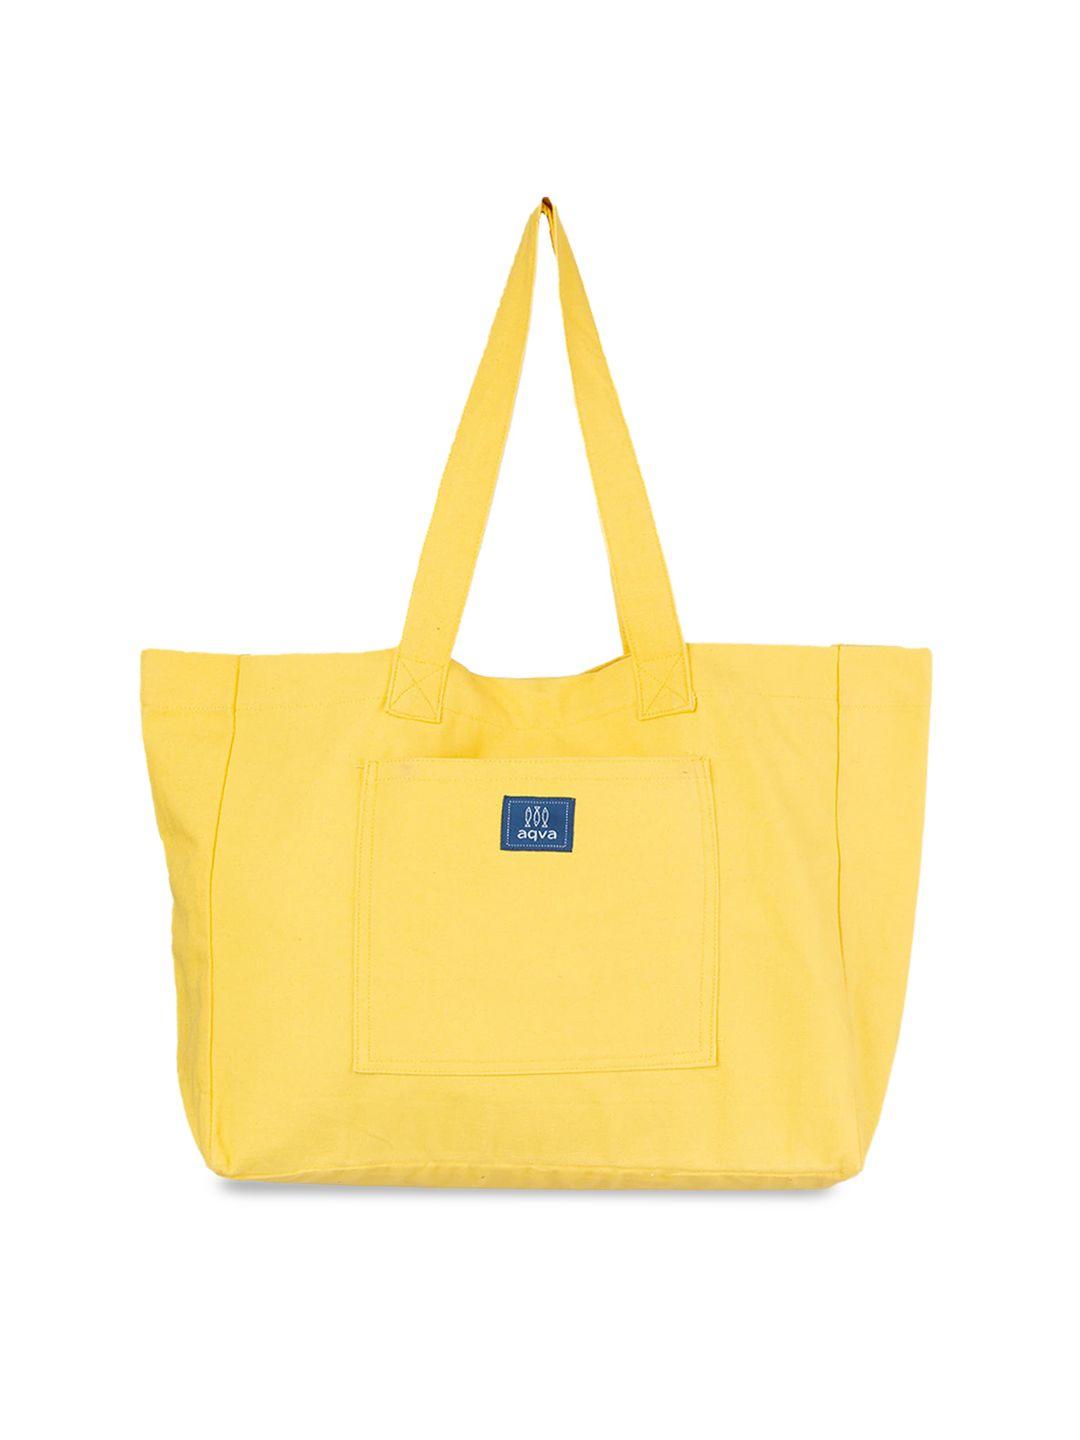 aqva yellow shopper cotton tote bag